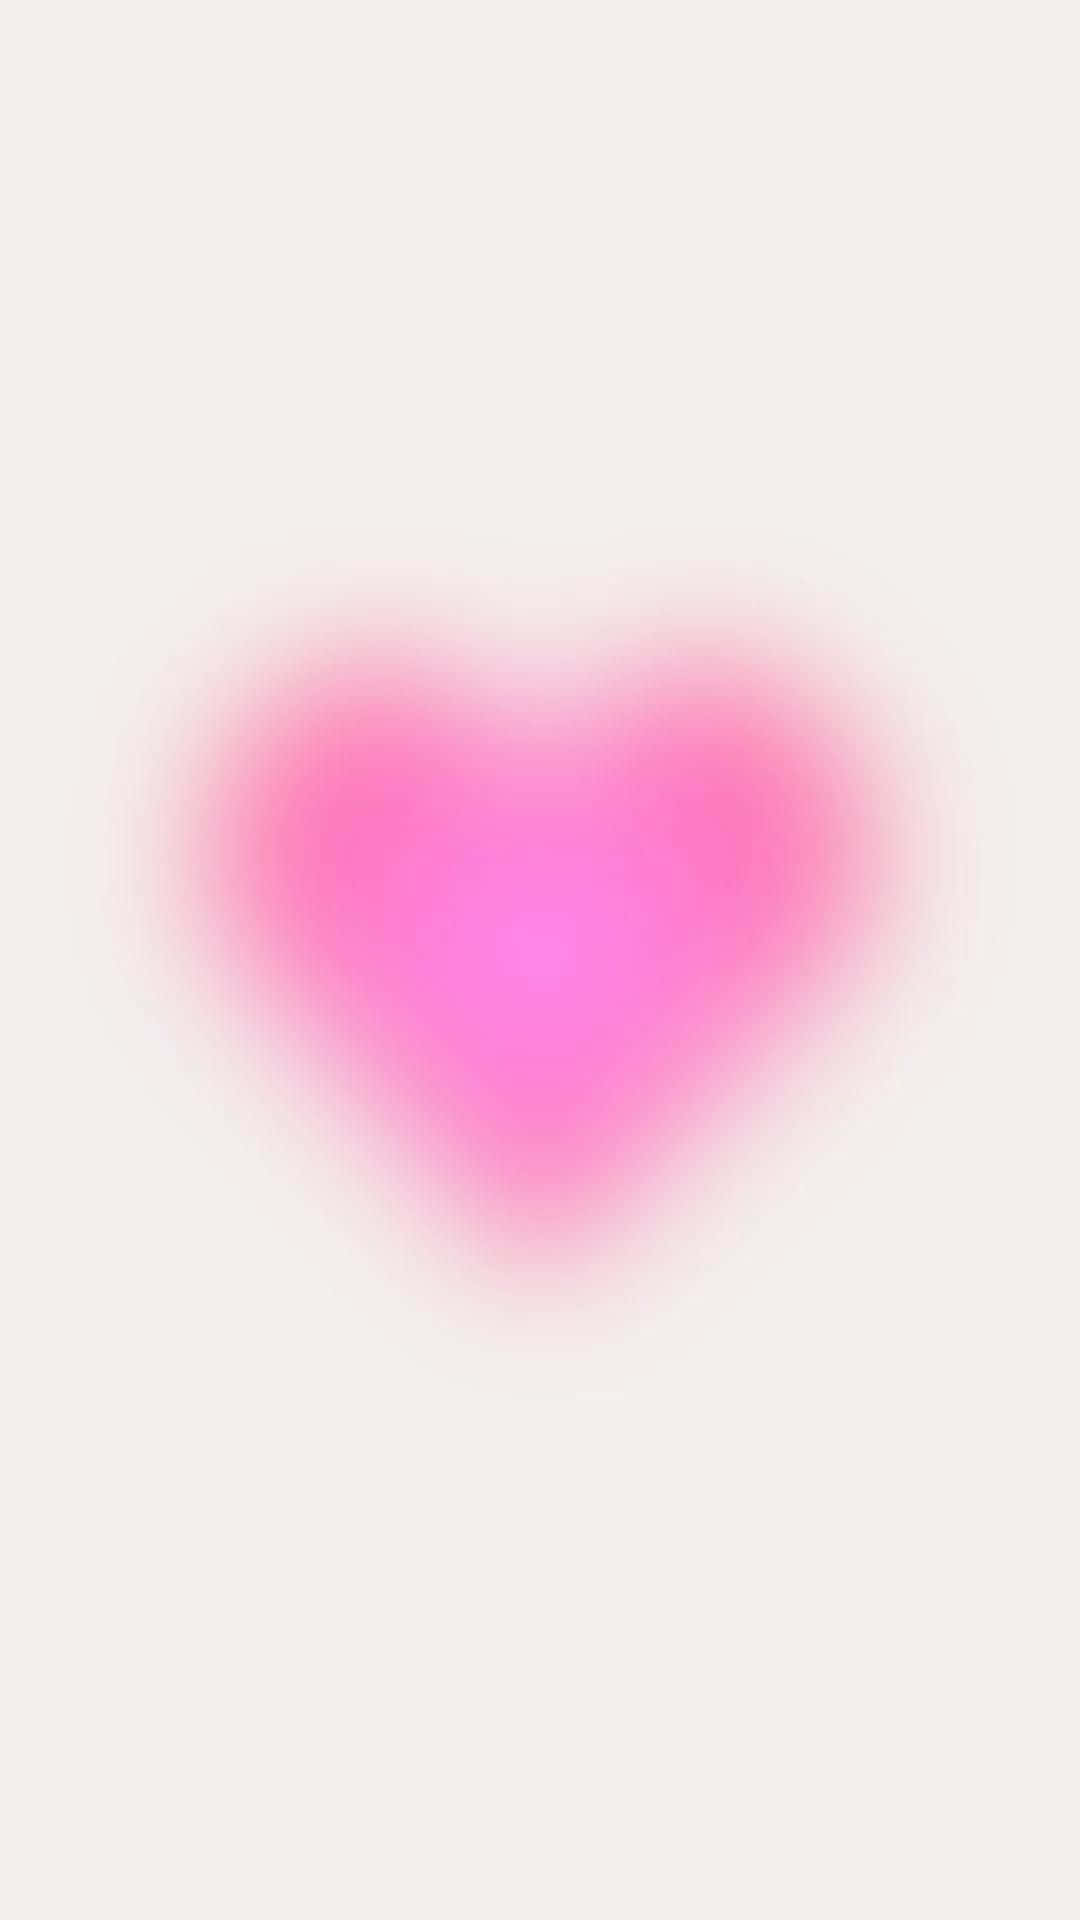 Abstract Blurry Heart Background.jpg Wallpaper